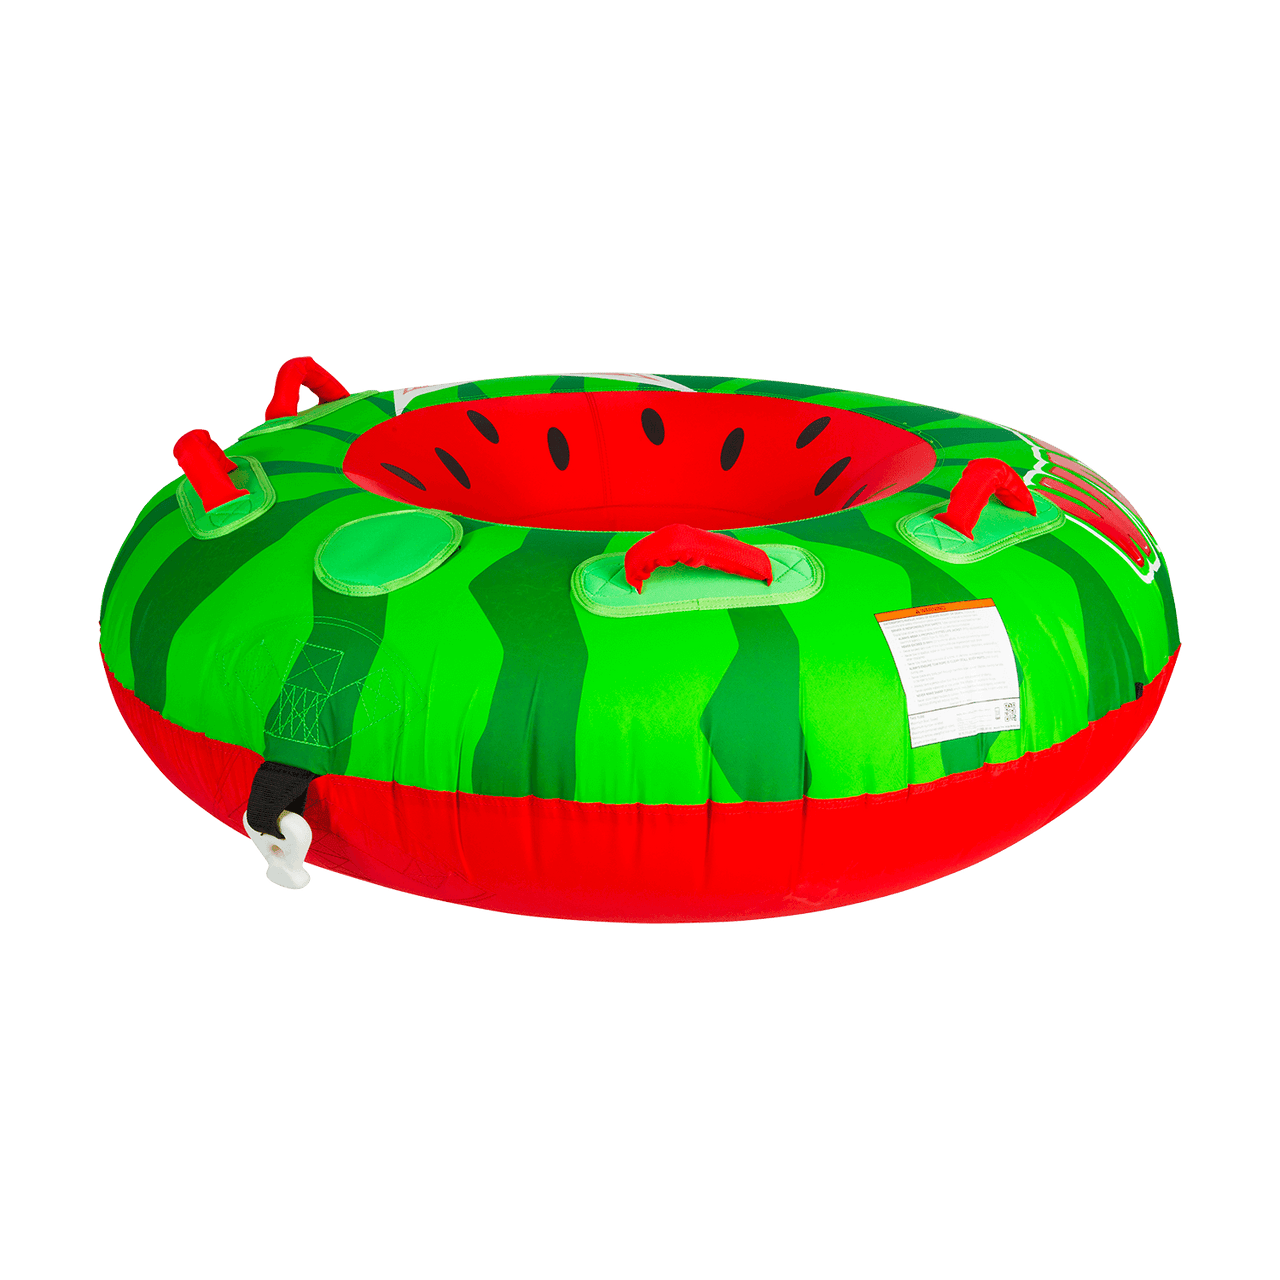 HO Sports Watermelon Towable Tube